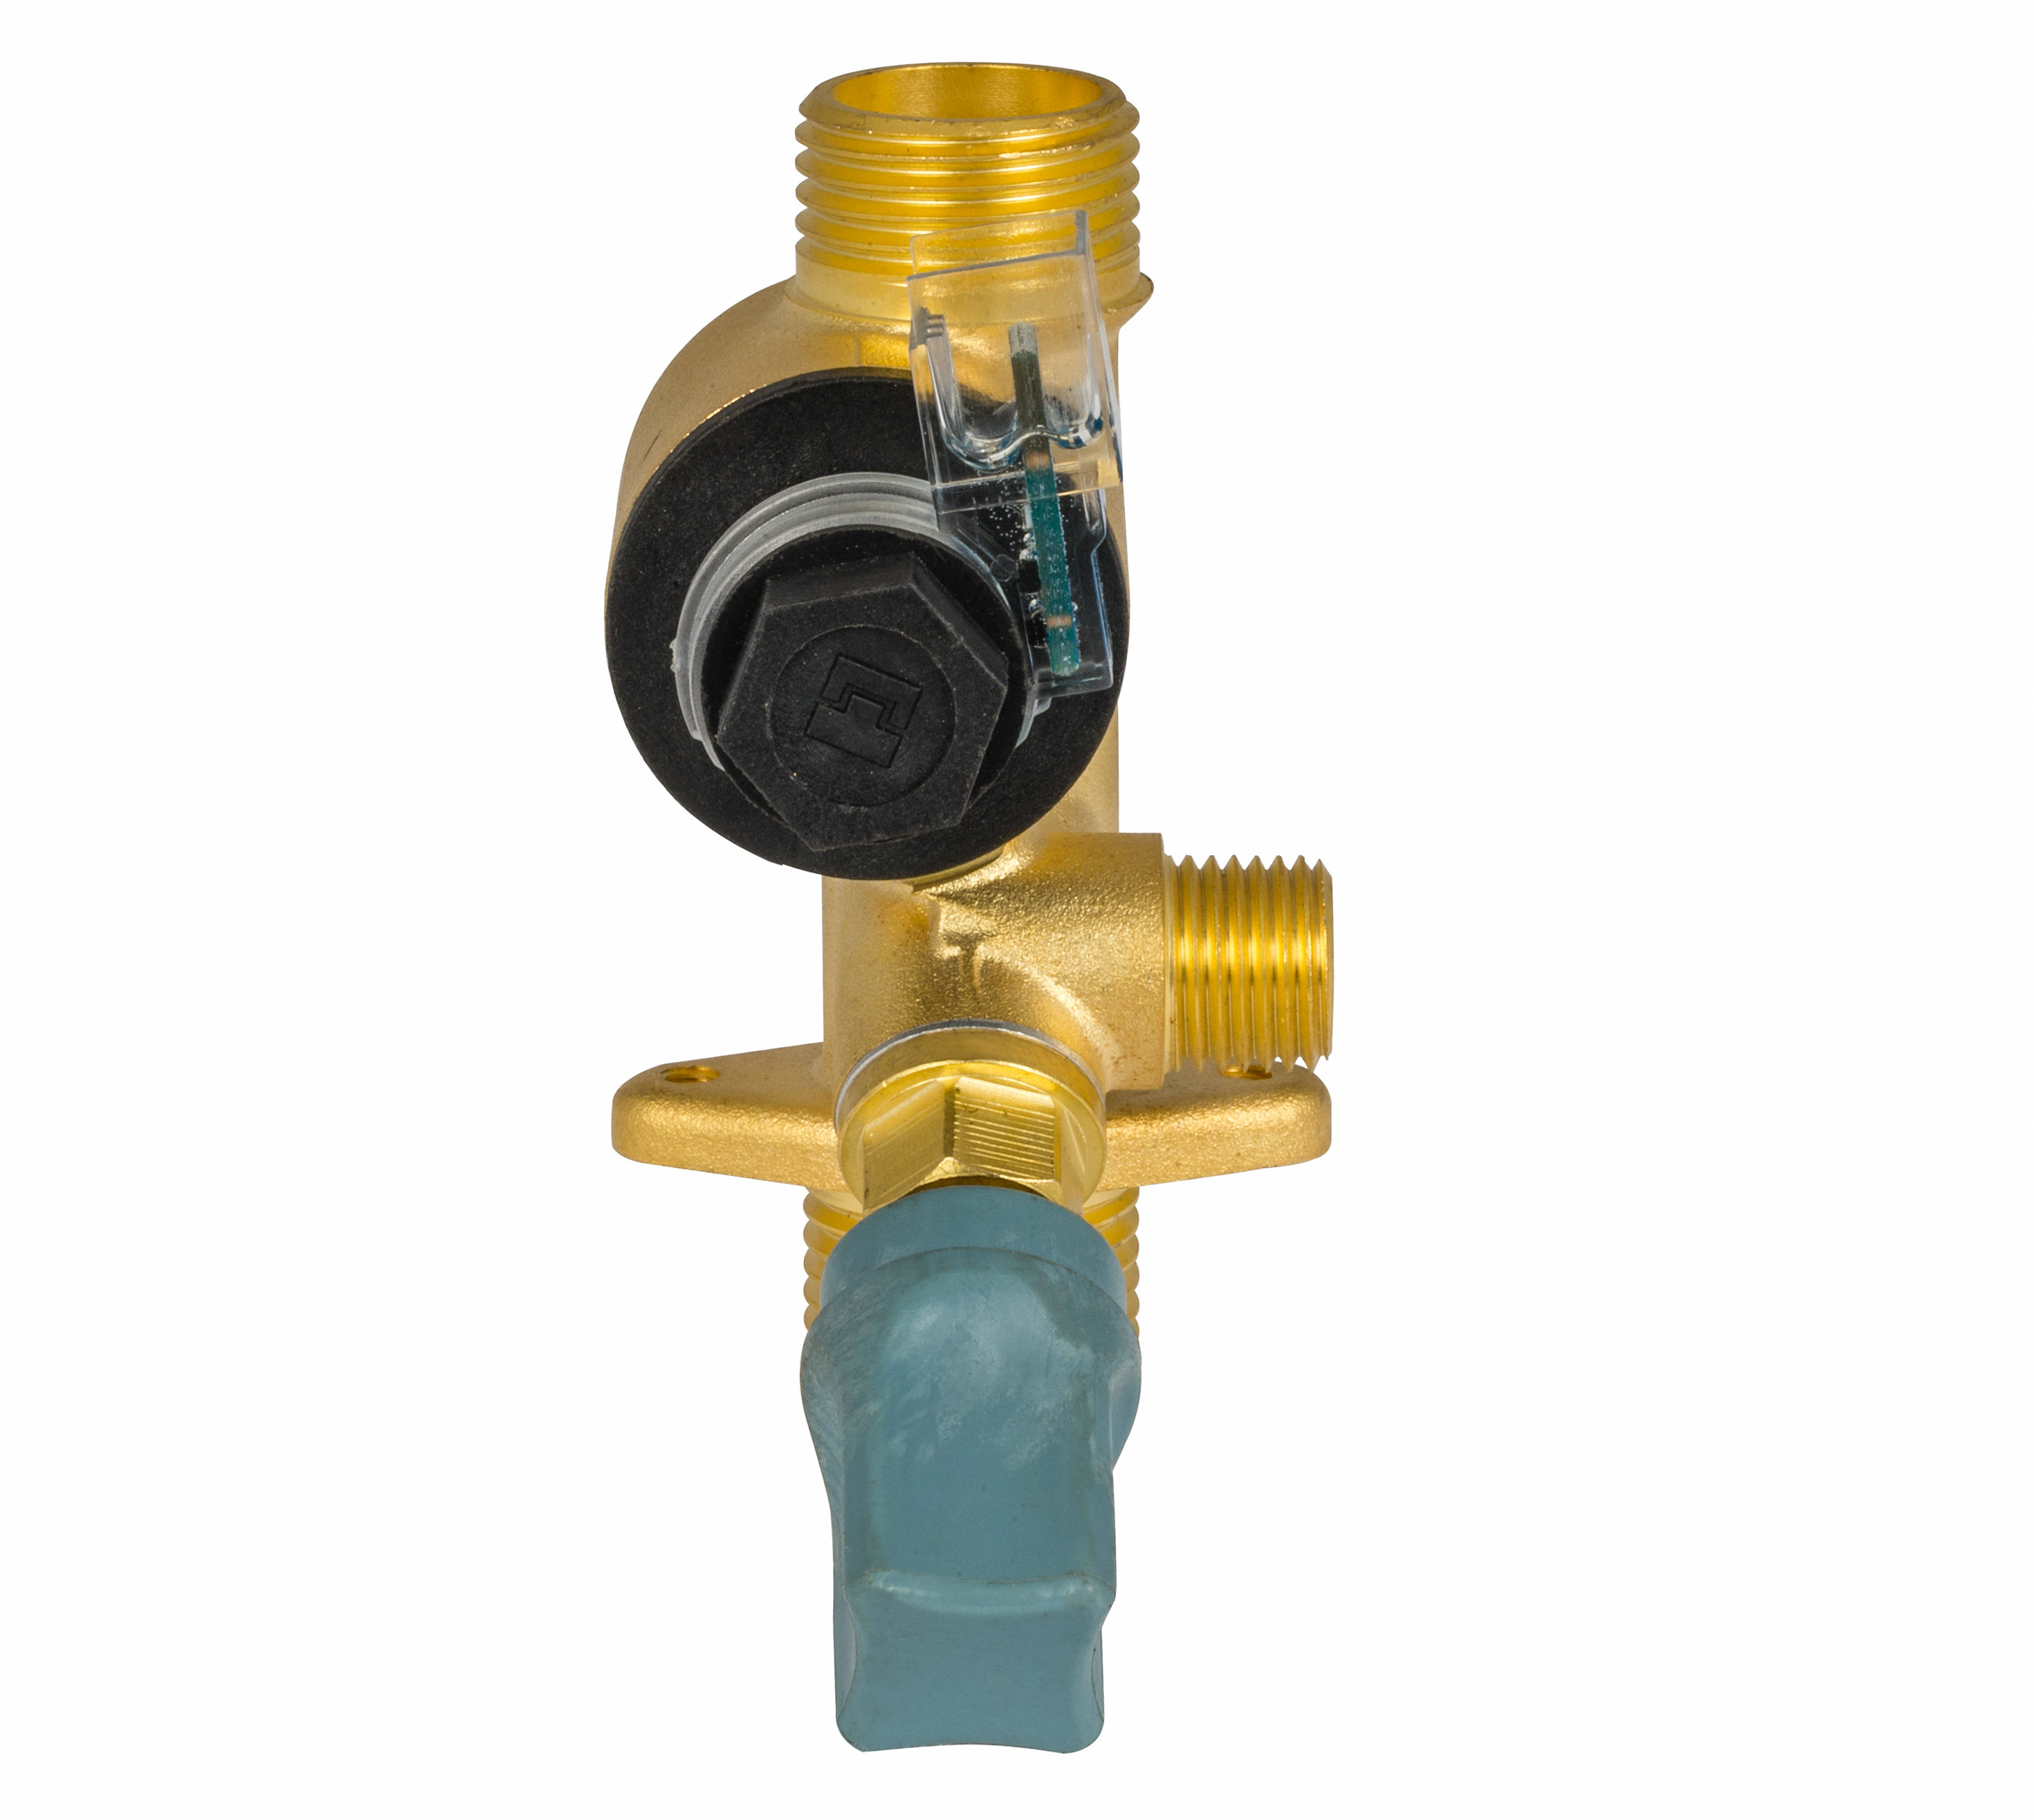 Casing machine inlet valve (turbine type flow sensor)